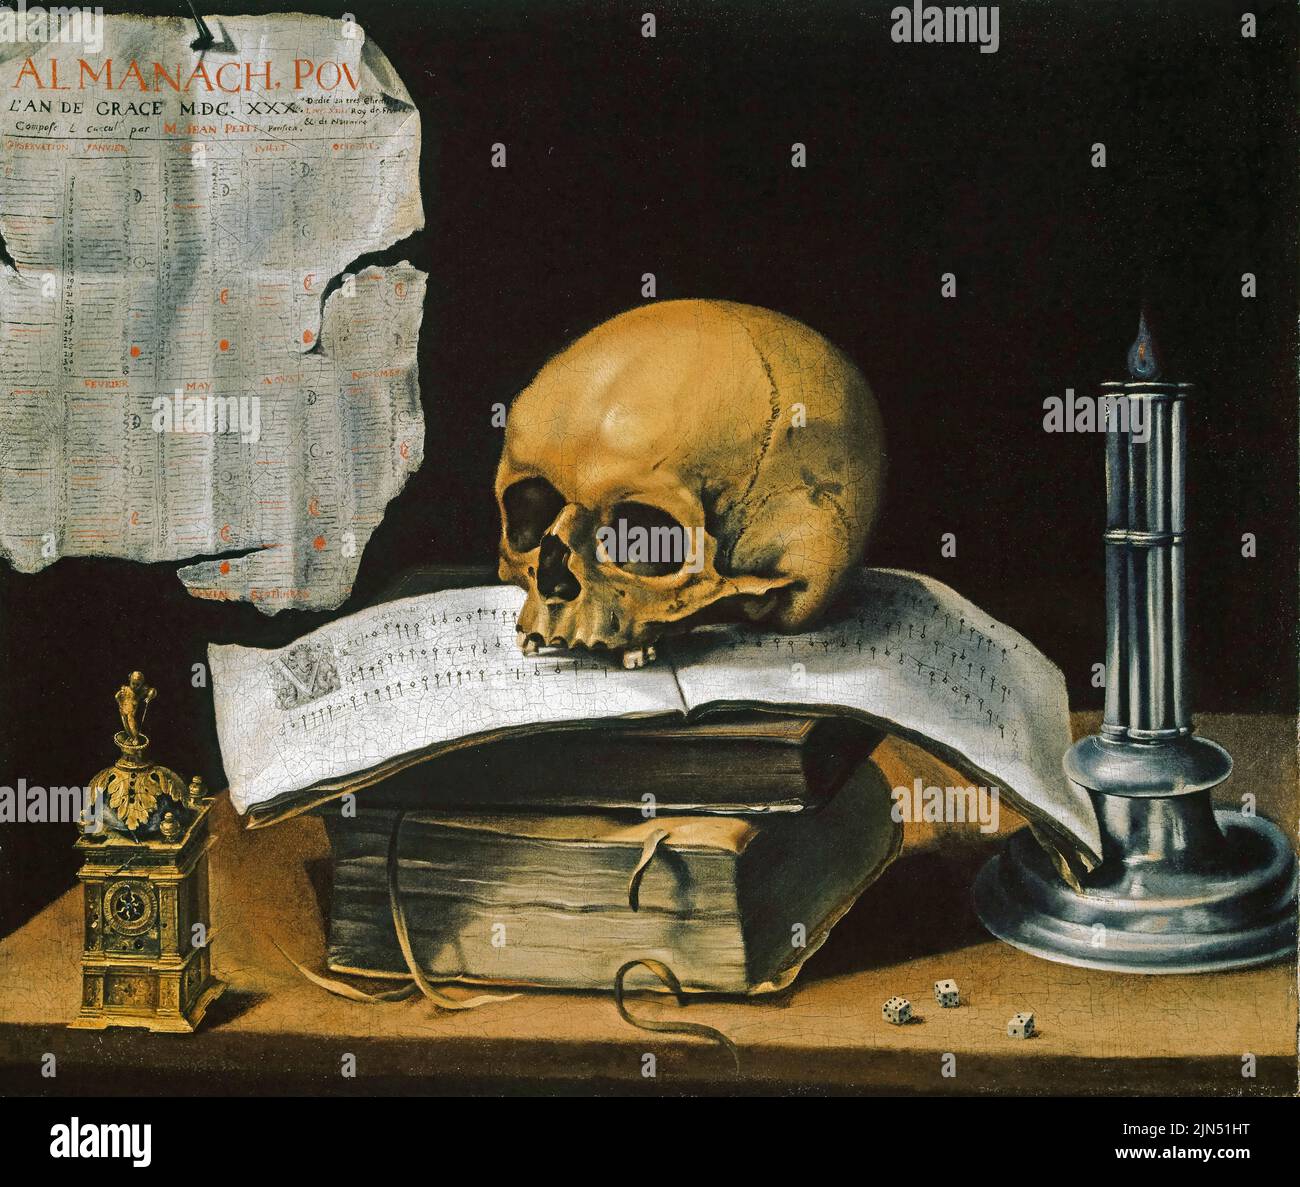 Sebastian Stoskopff, Vanitas Still Life with Skull, painting in oil on canvas, 1630 Stock Photo